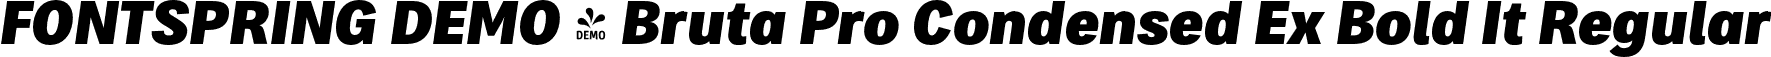 FONTSPRING DEMO - Bruta Pro Condensed Ex Bold It Regular font | Fontspring-DEMO-brutaprocondensed-extrabolditalic.otf